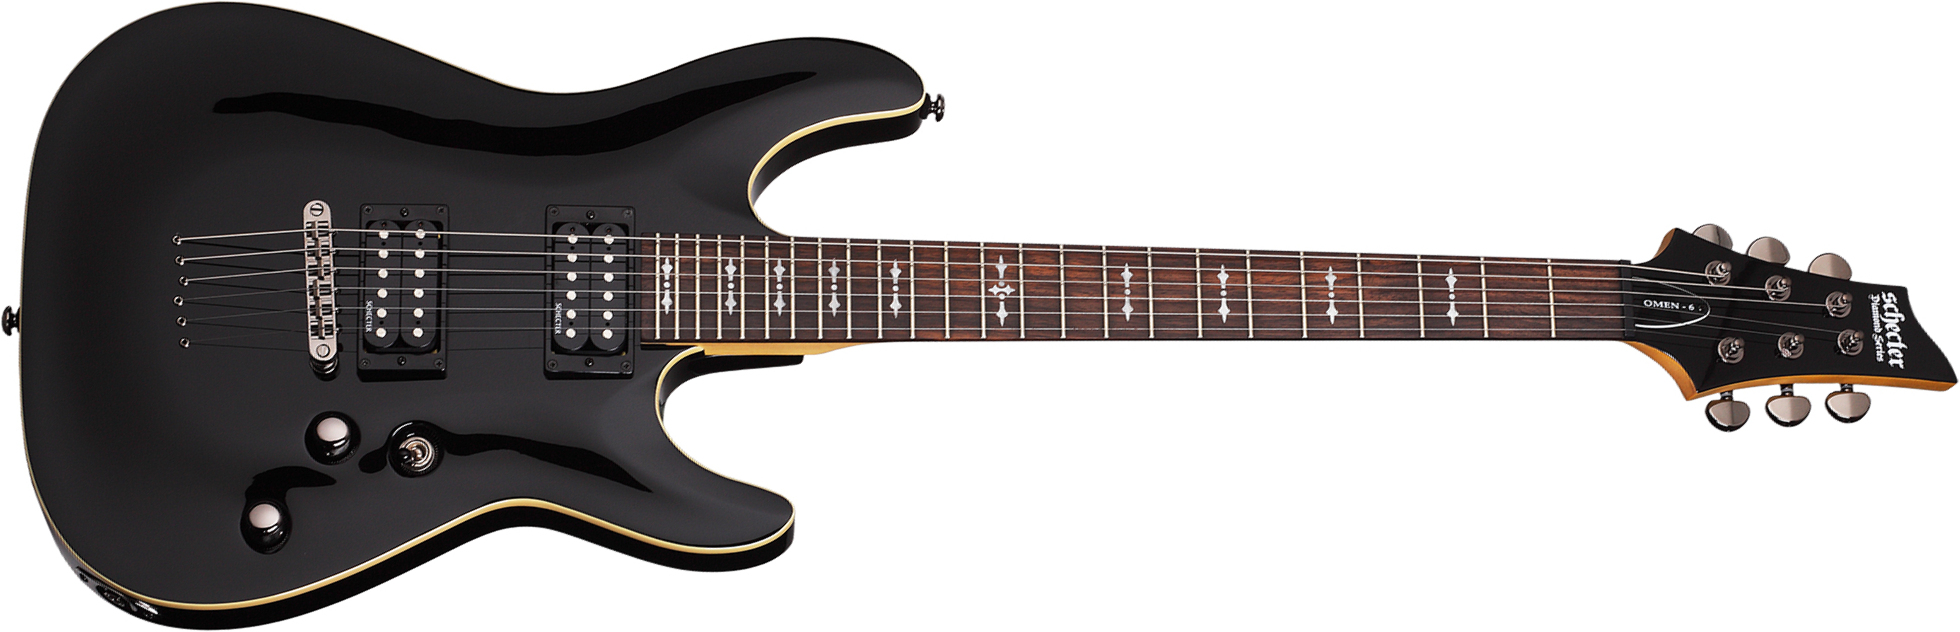 Schecter Omen-6 2h Ht Rw - Black - Str shape electric guitar - Main picture